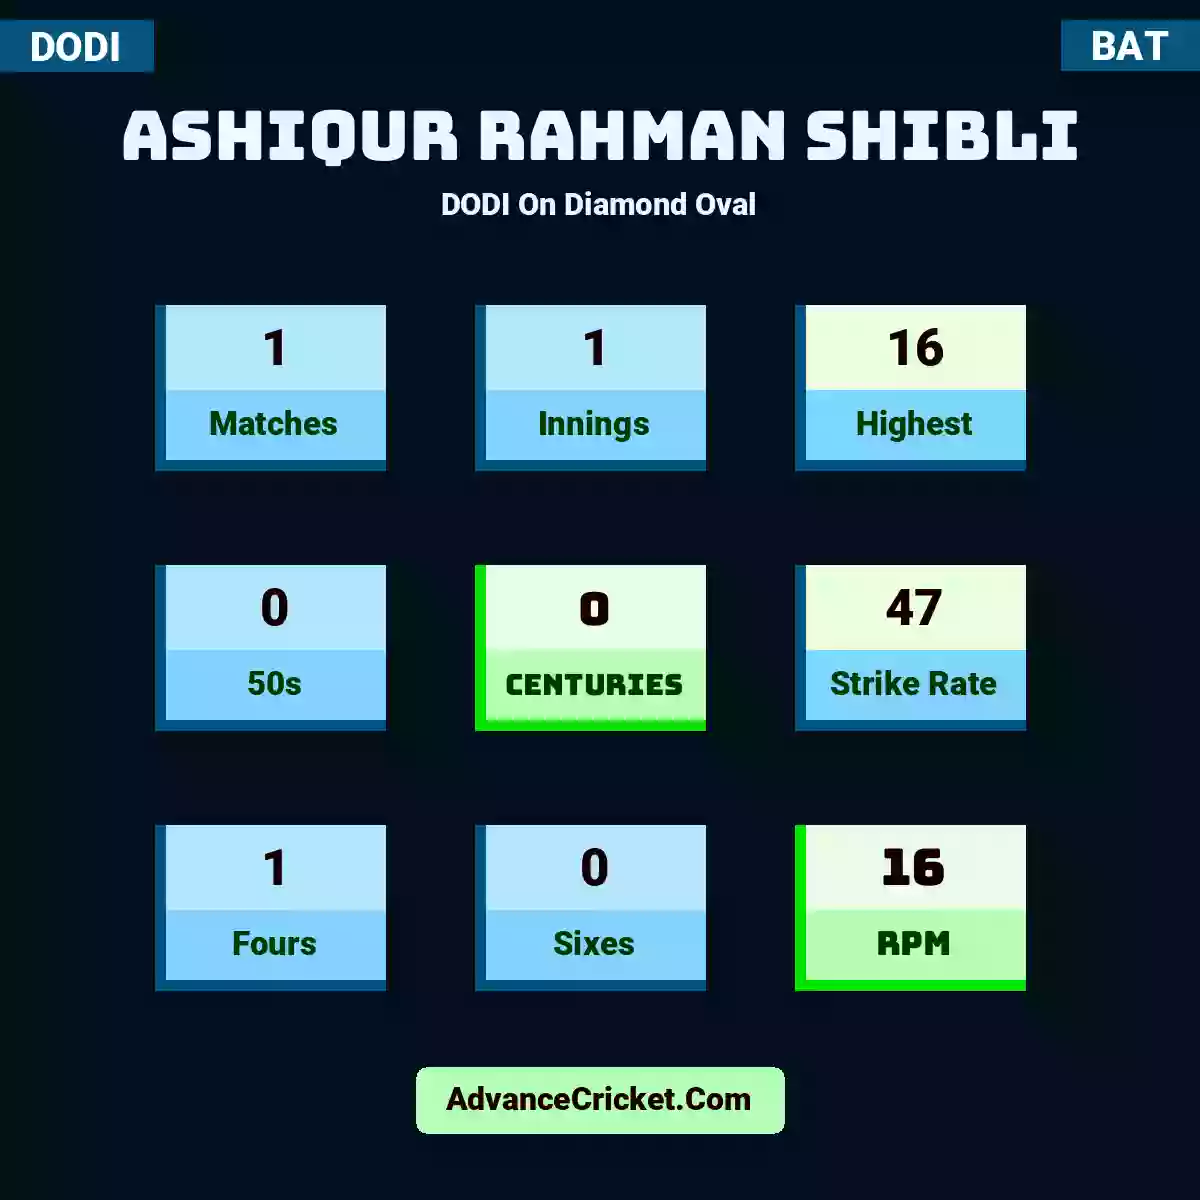 Ashiqur Rahman Shibli DODI  On Diamond Oval, Ashiqur Rahman Shibli played 1 matches, scored 16 runs as highest, 0 half-centuries, and 0 centuries, with a strike rate of 47. A.Rahman.Shibli hit 1 fours and 0 sixes, with an RPM of 16.